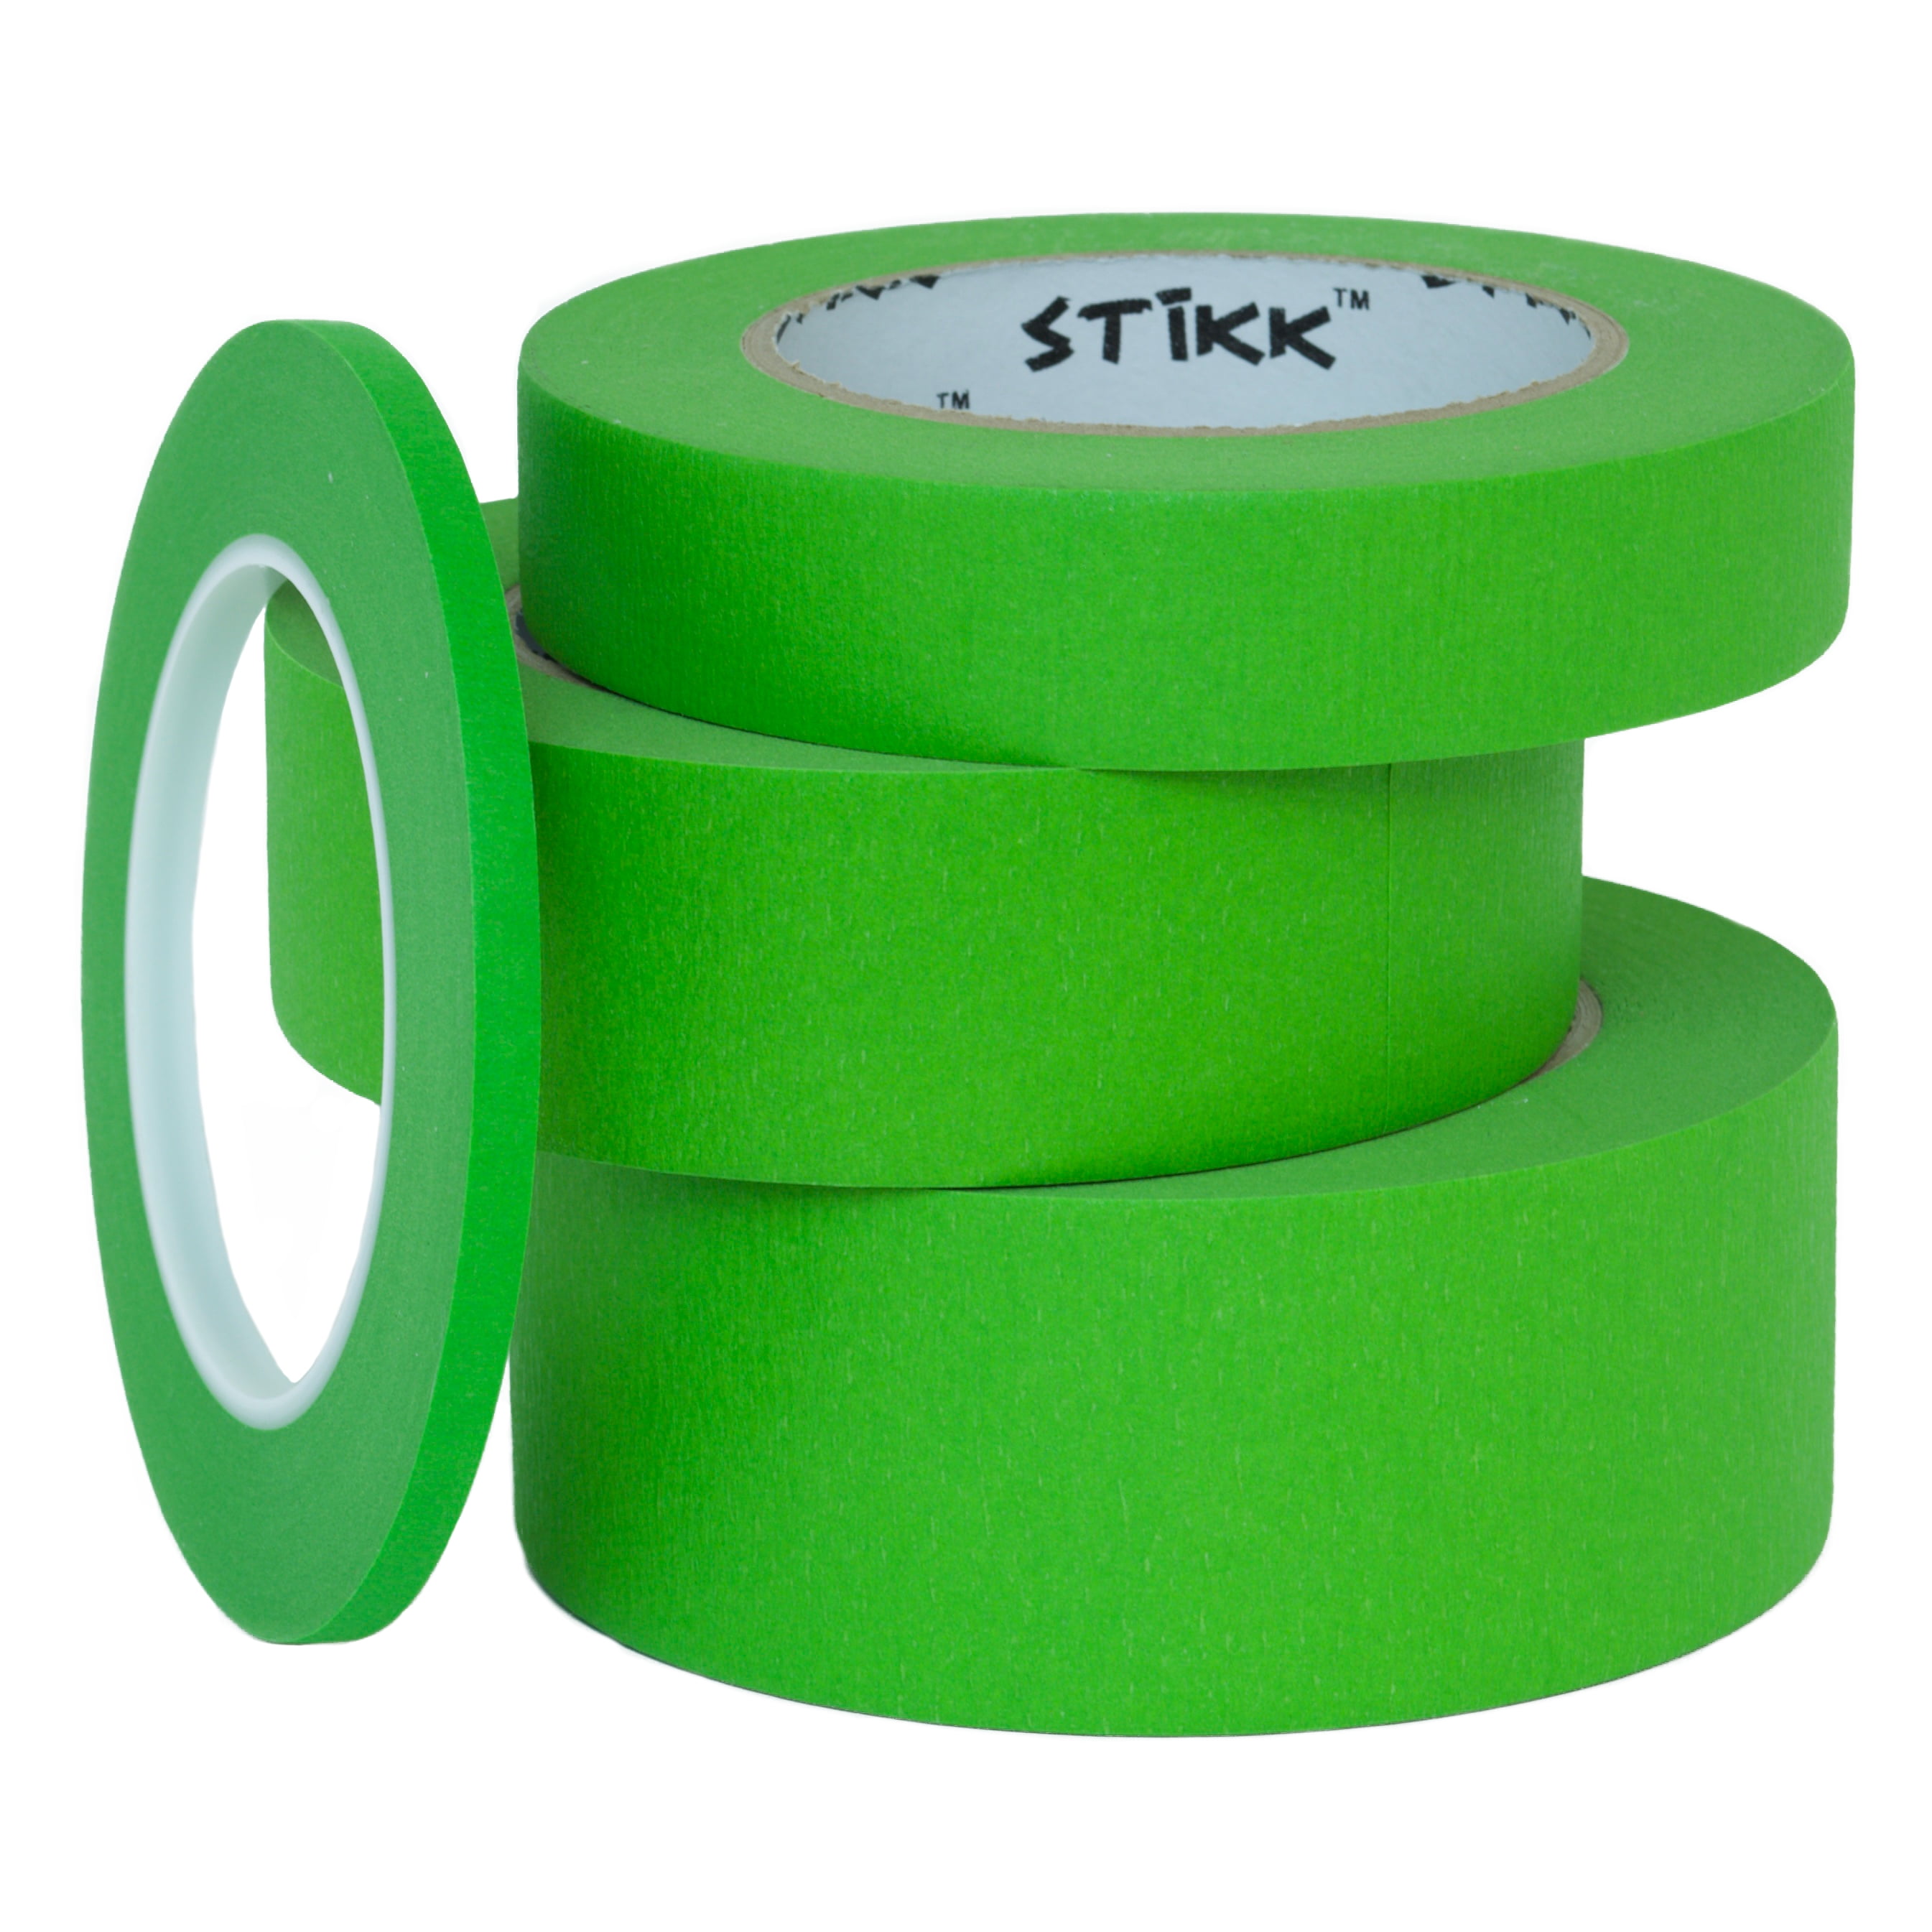 Stikk Painters Tape - 3pk Forest Dark Green Painter Tape - 1 inch x 60 Yards - Paint Tape for Painting, Edges, Trim, Ceilings - Masking Tape for DIY